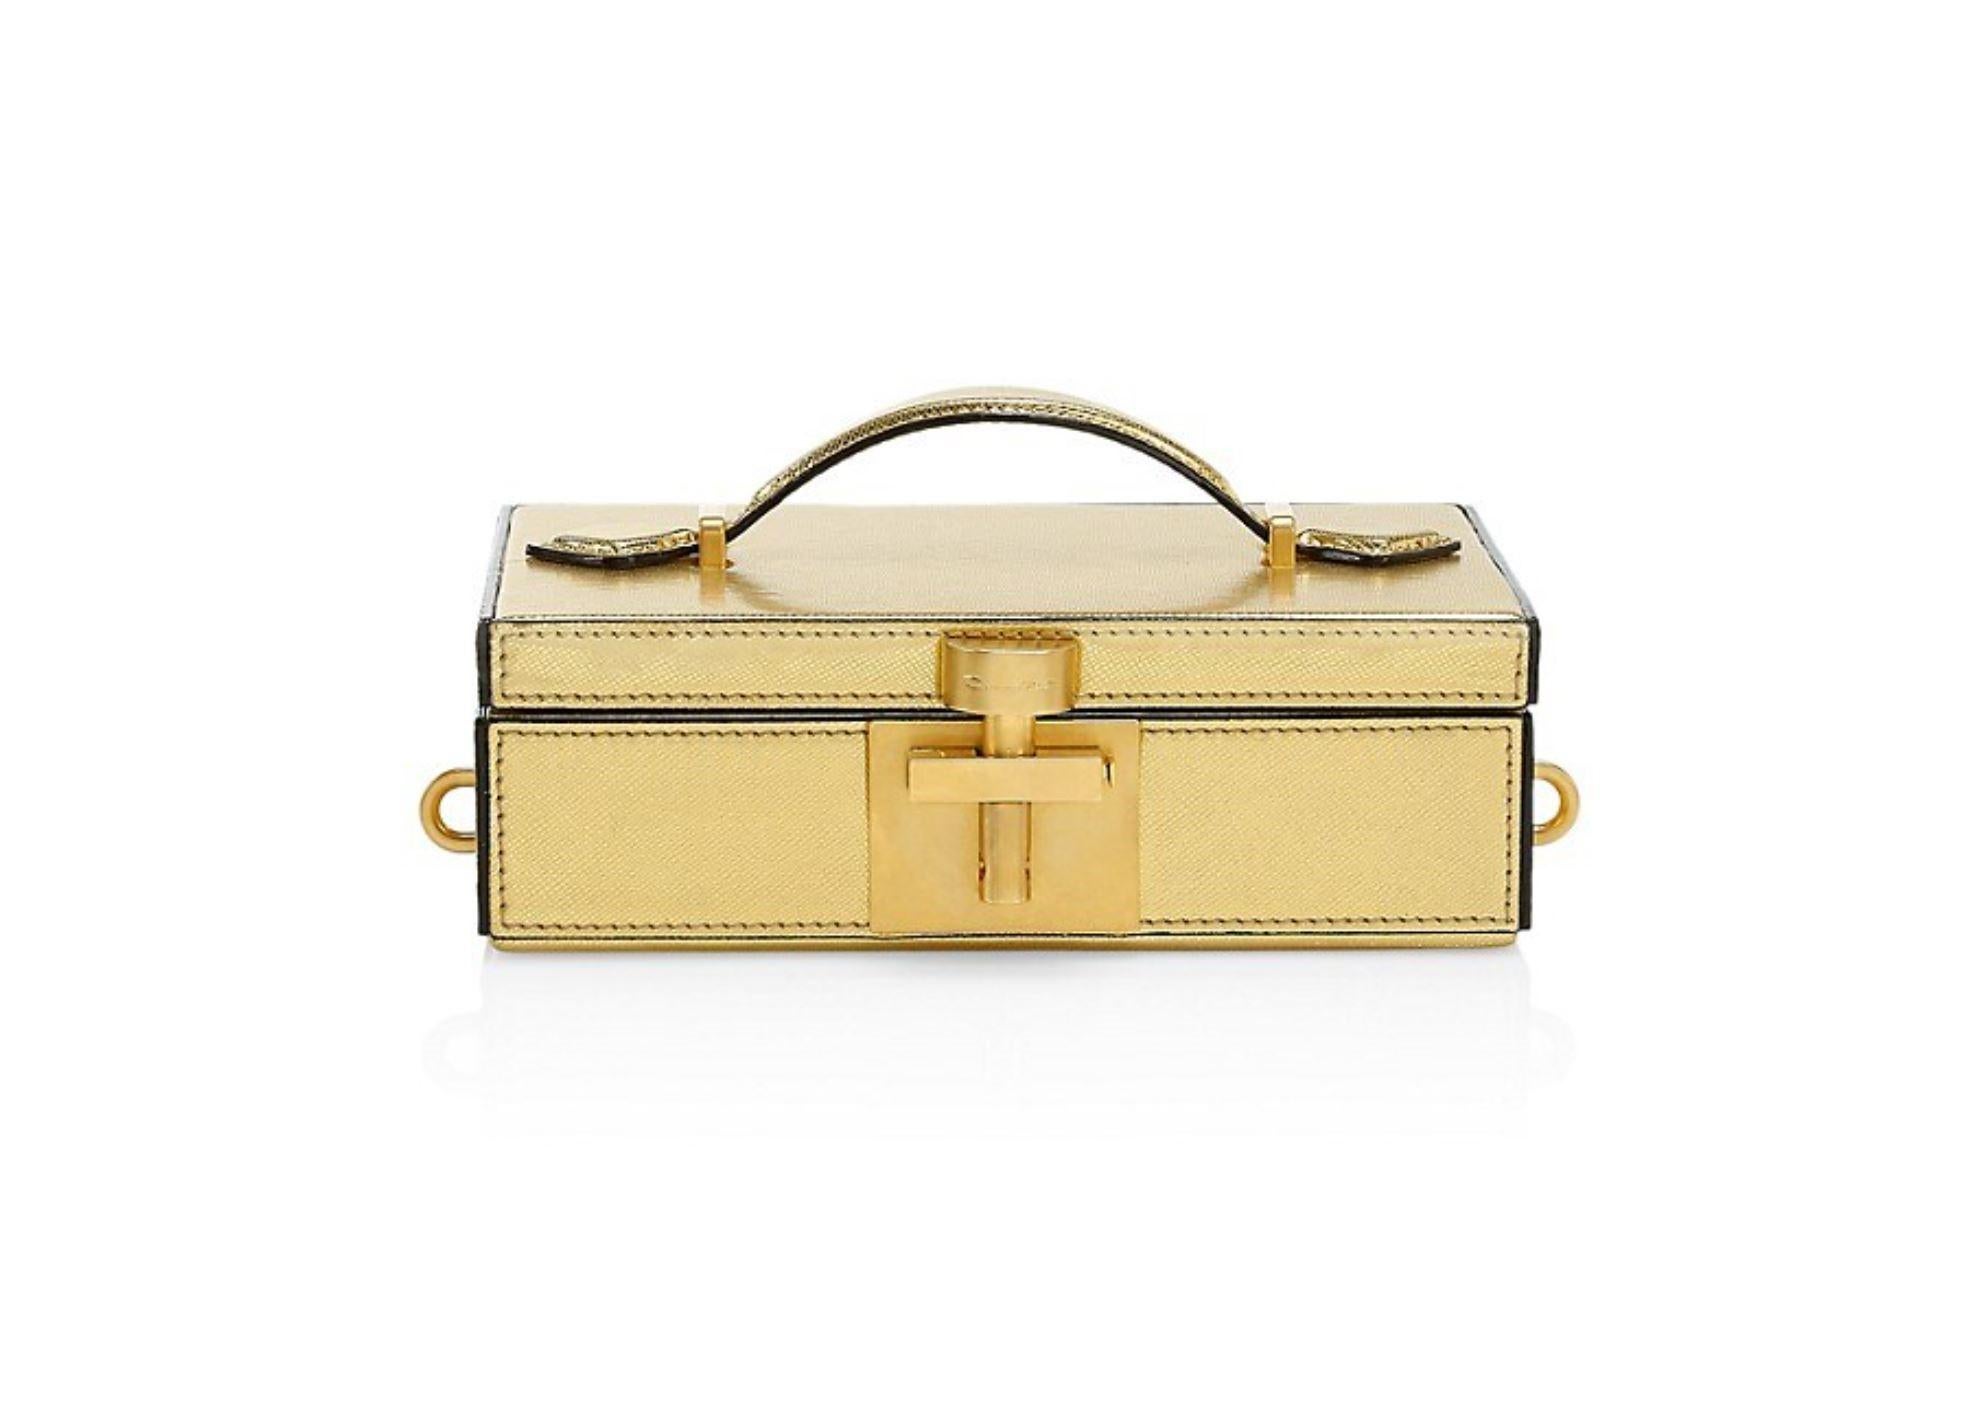 New Rare Oscar De La Renta 2020 Gold Alibi Minaudière Bag With Box & Tags $1890 3